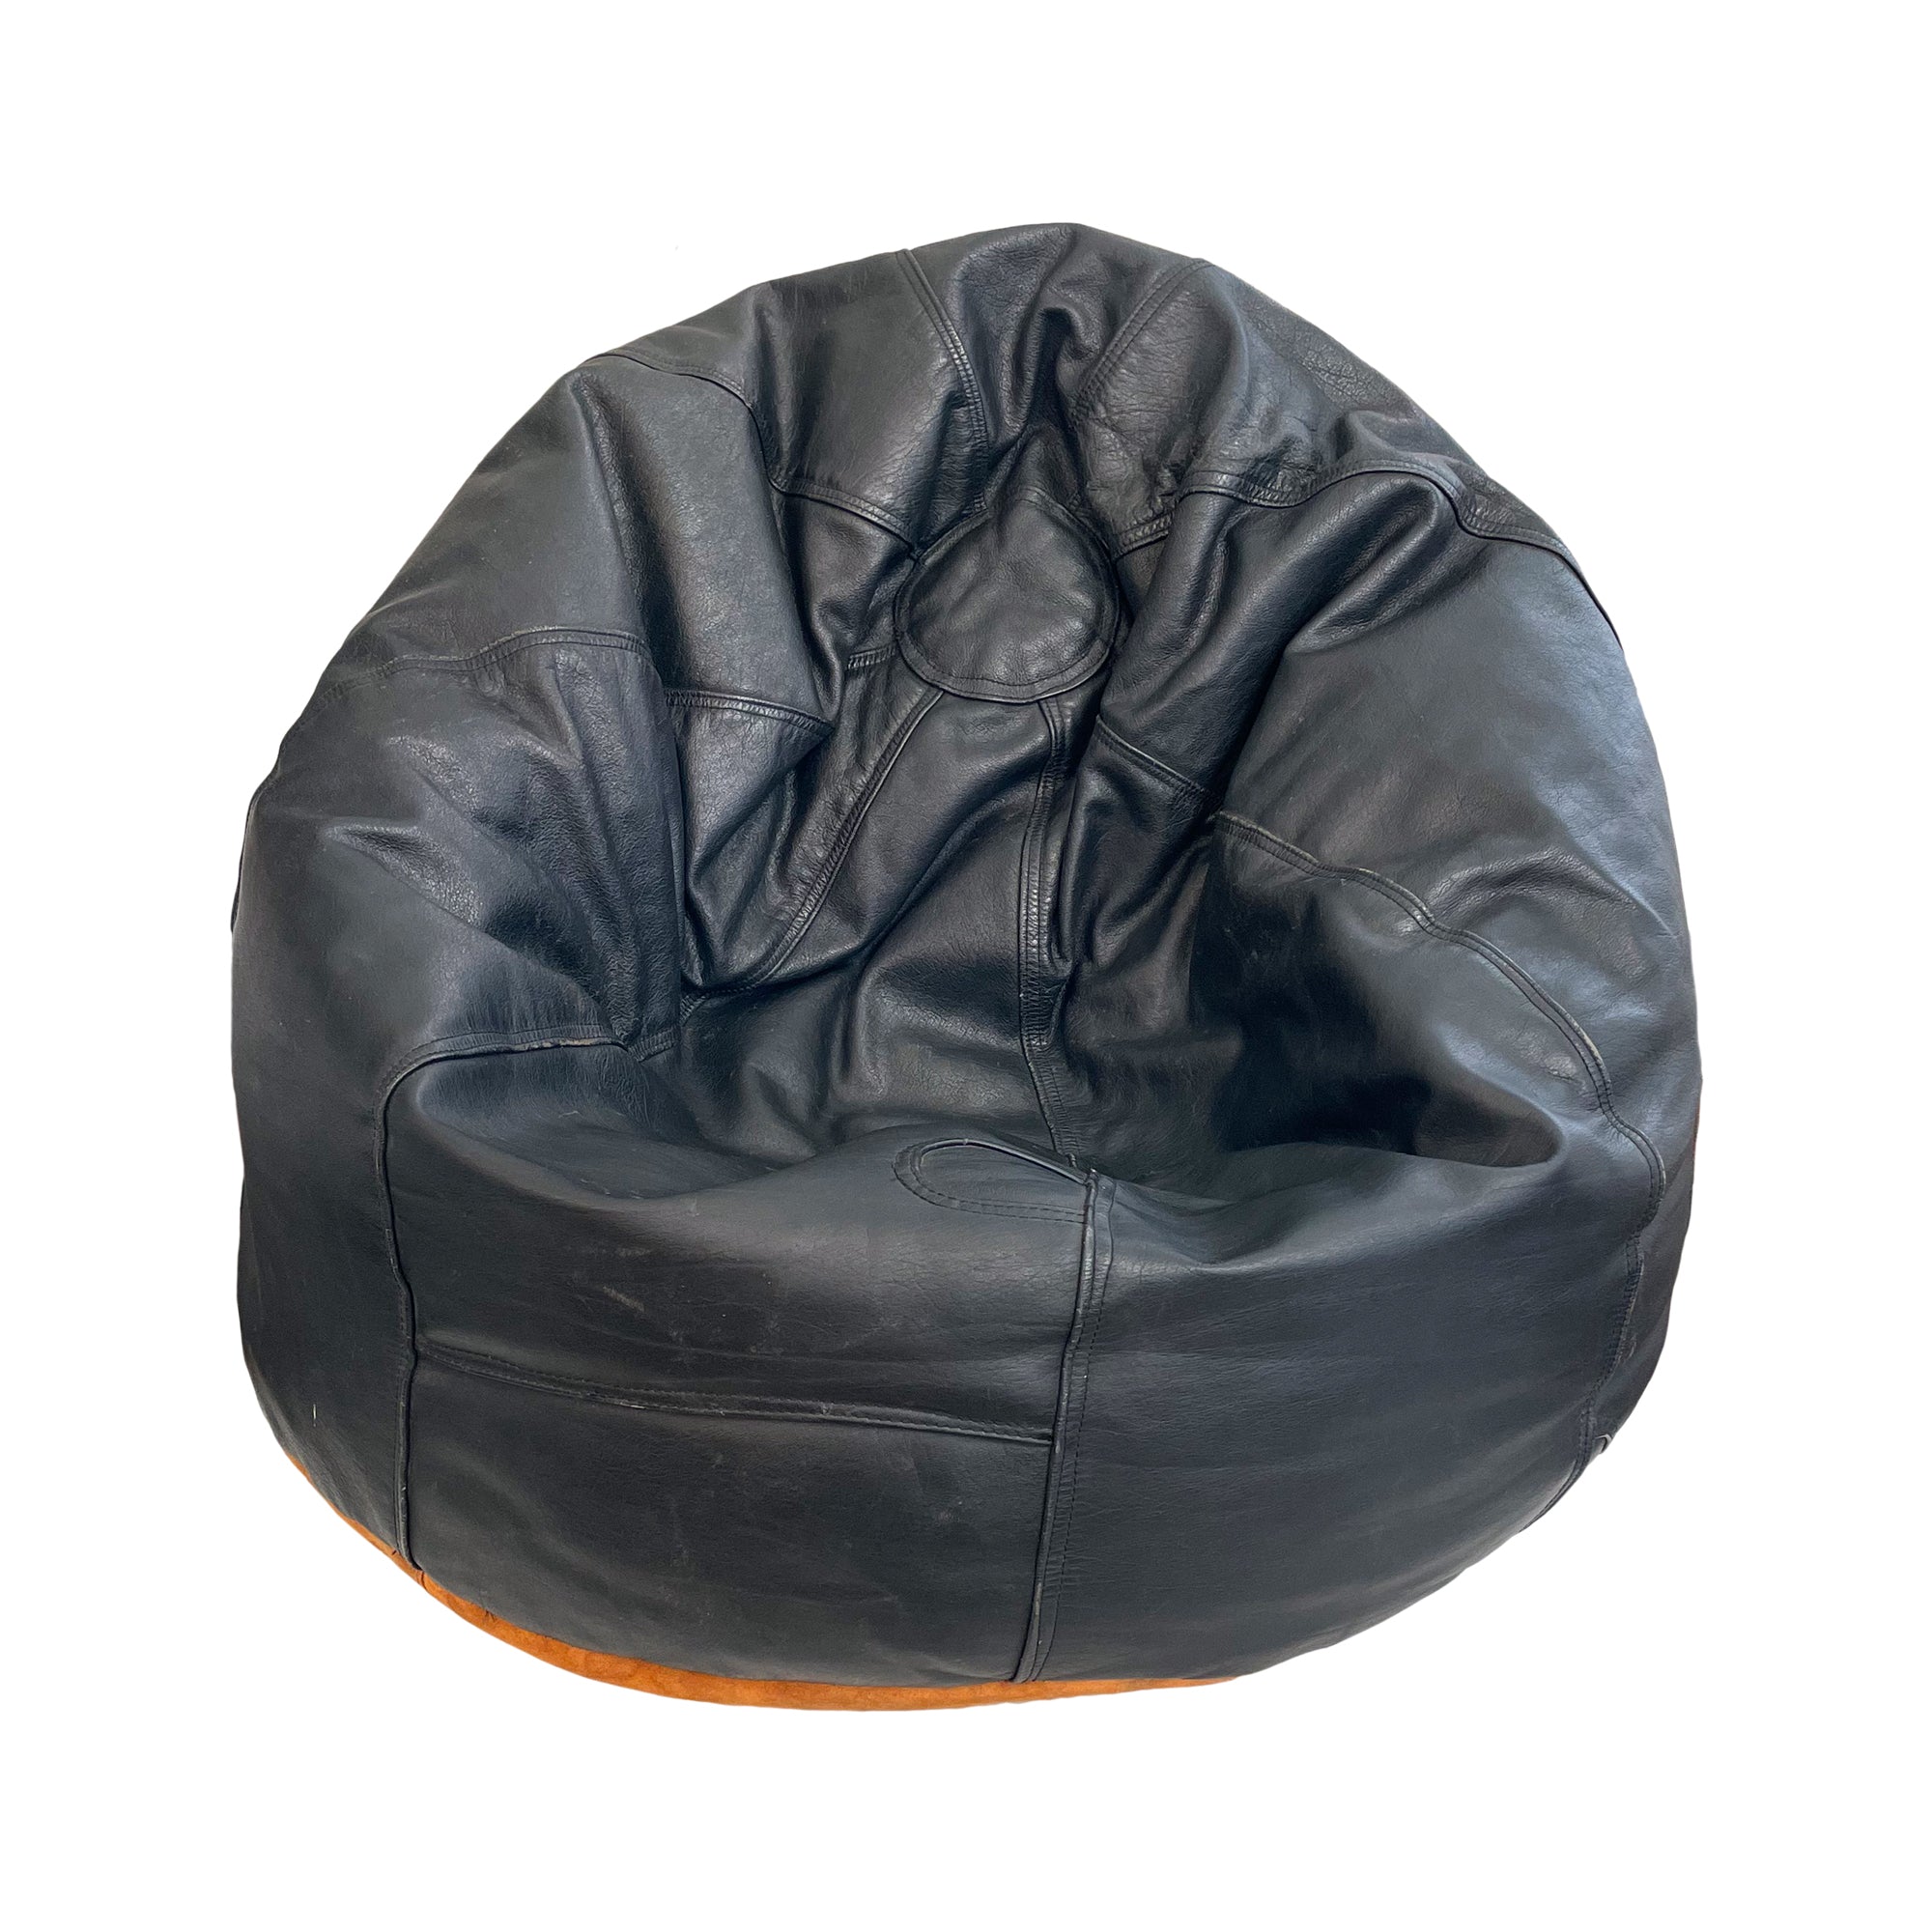 Midcentury Leather Bean Bag Chair